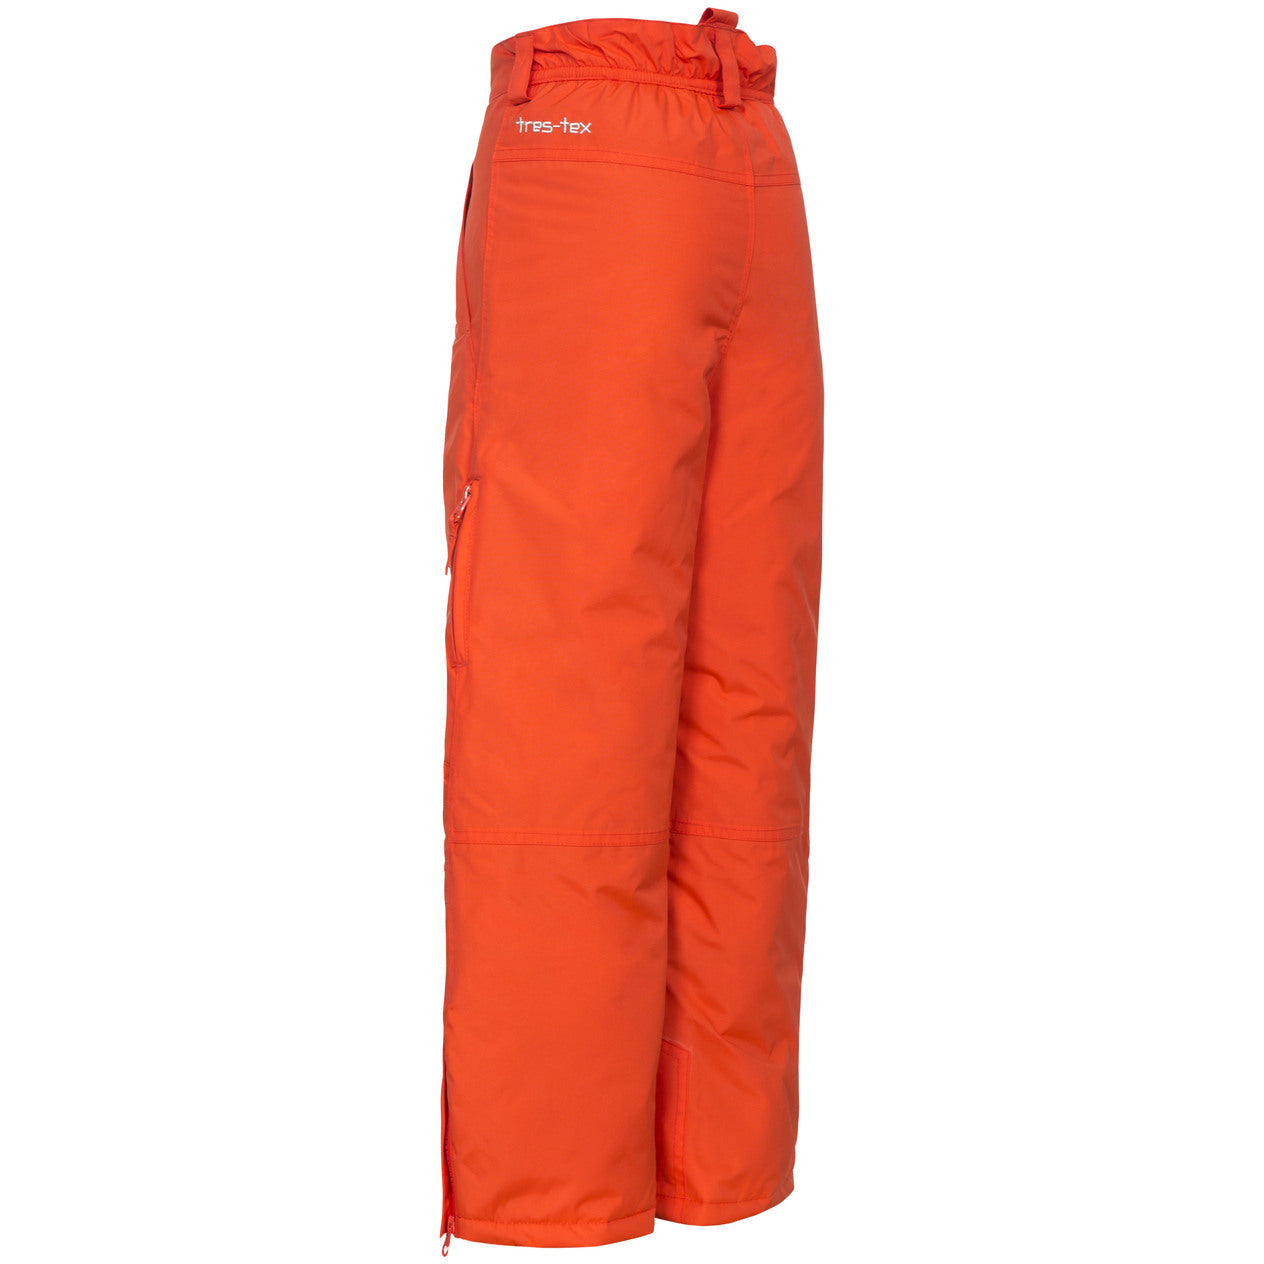 Contamines - Kid's Ski Pants - Hot Orange